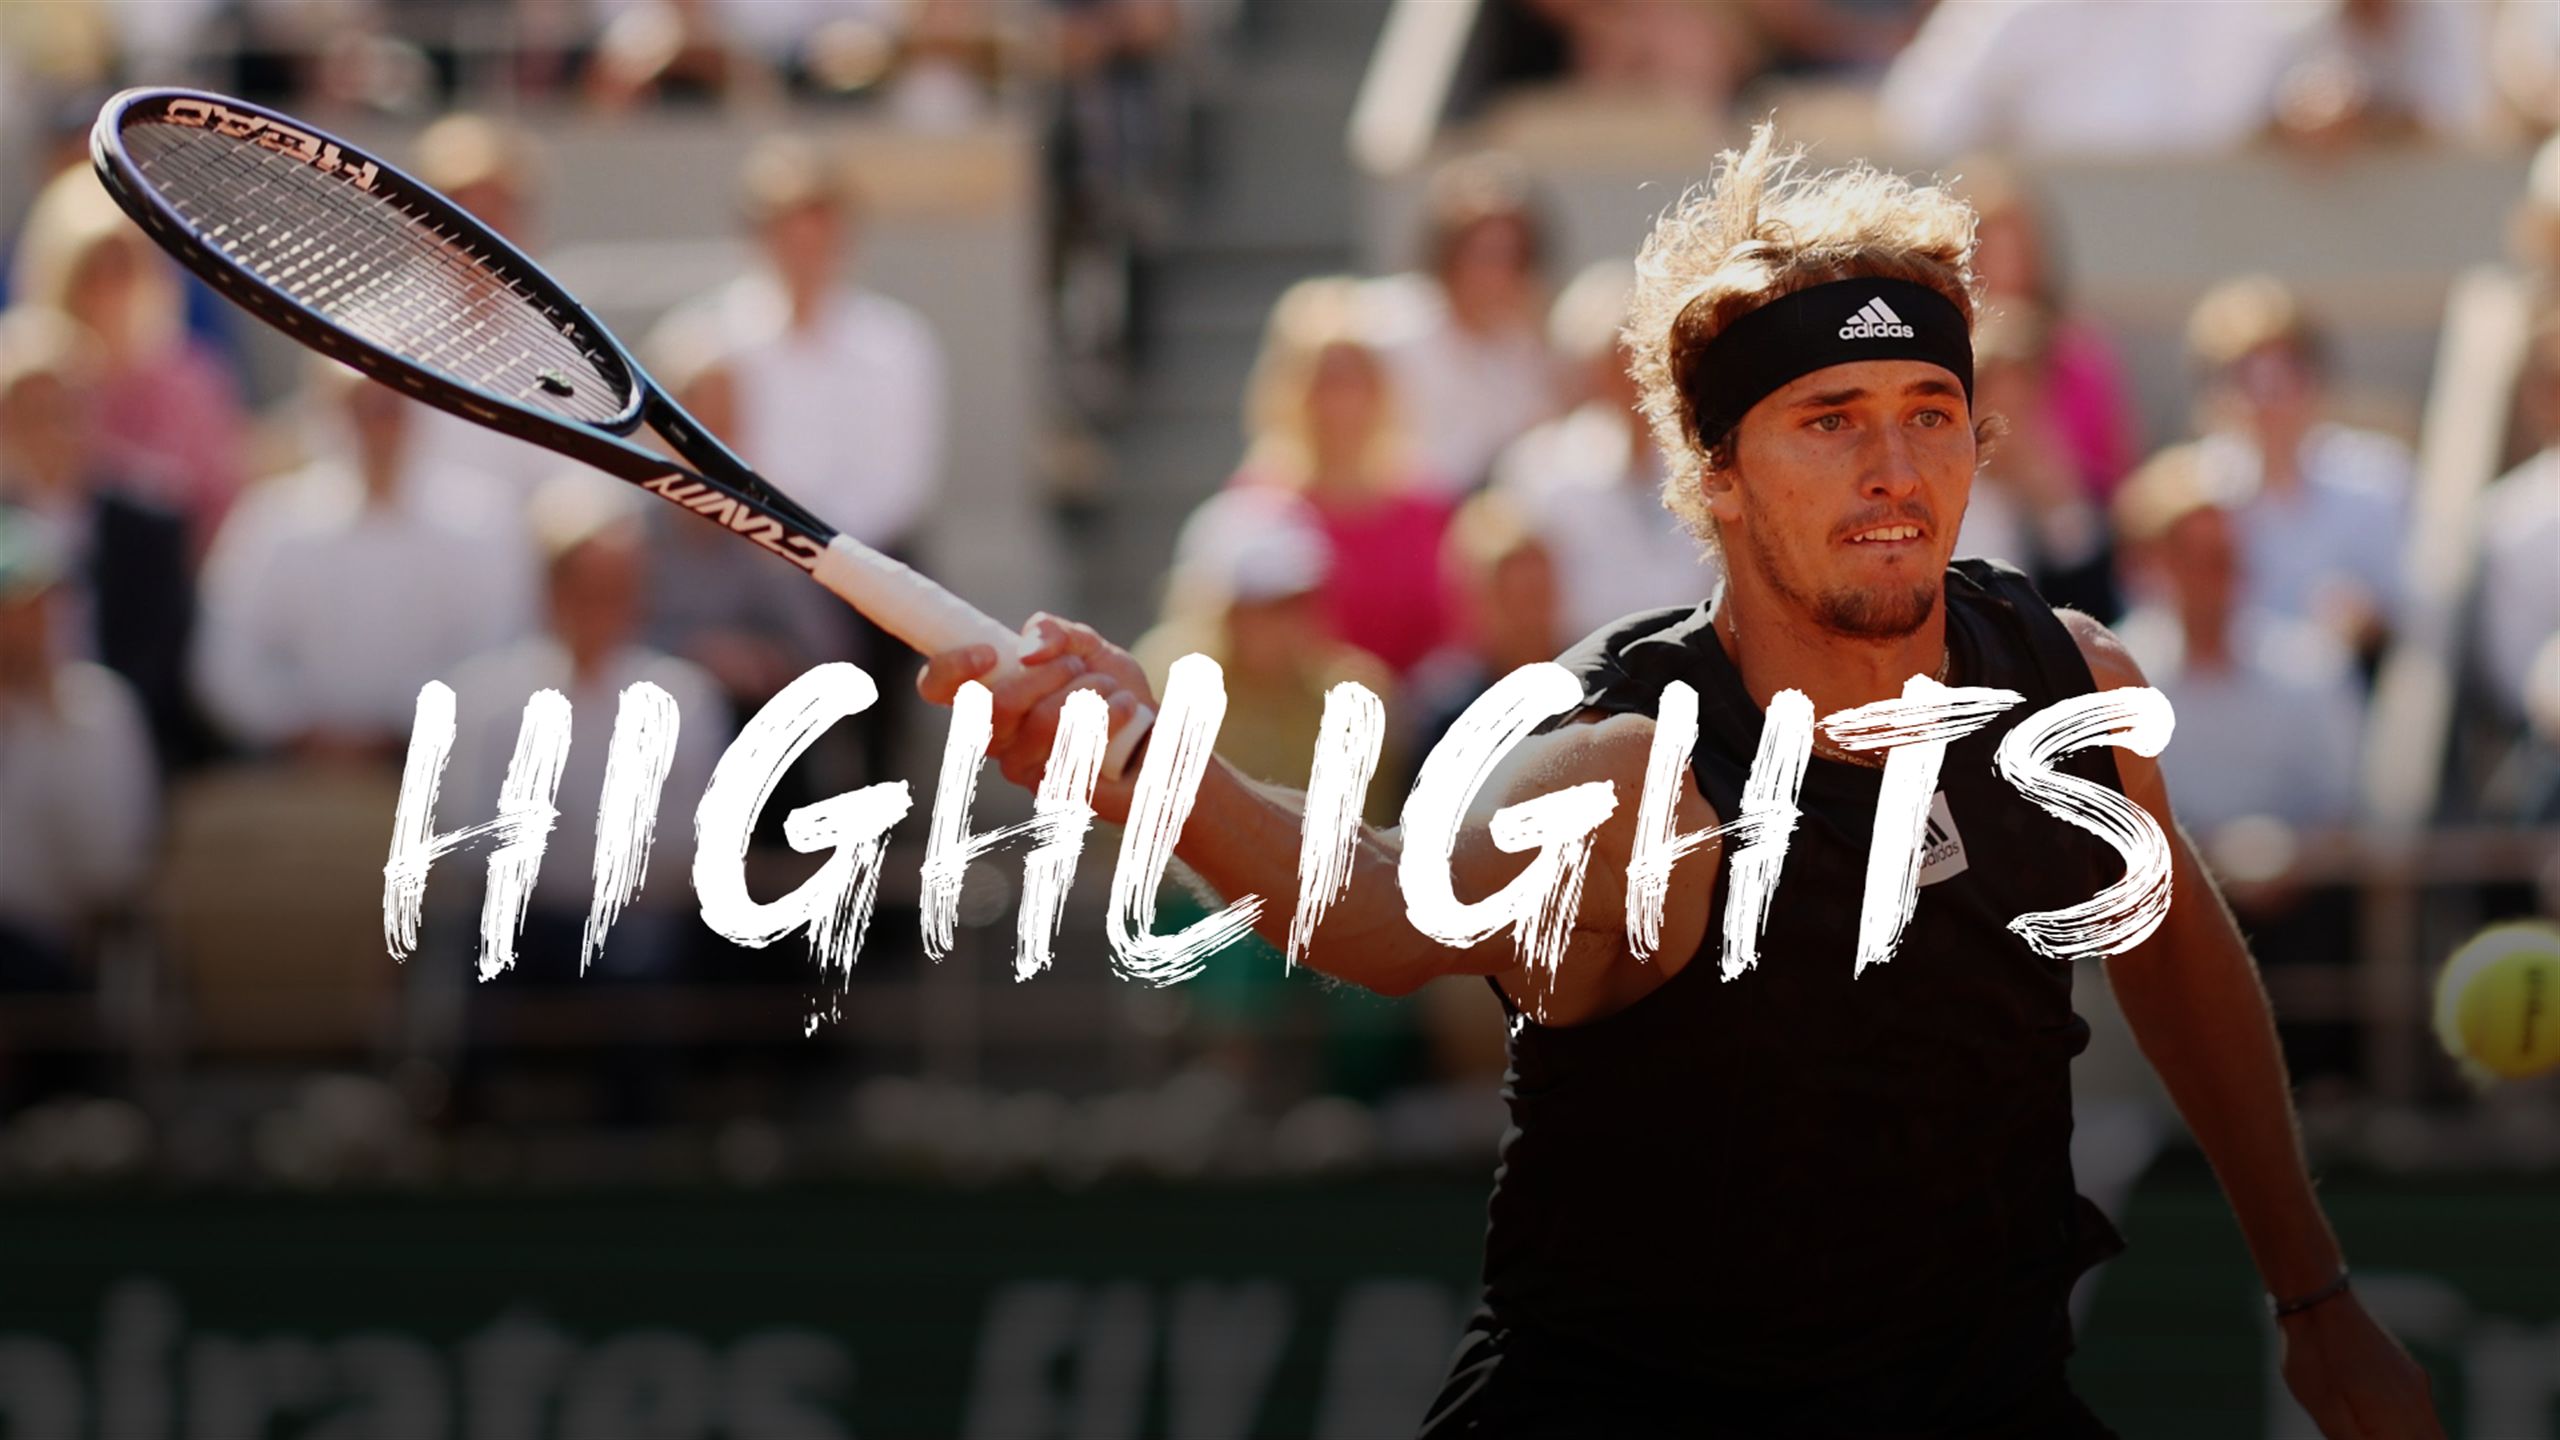 Highlights Alexander Zverev battles past Carlos Alcaraz in thrilling French Open quarter-final - Tennis video